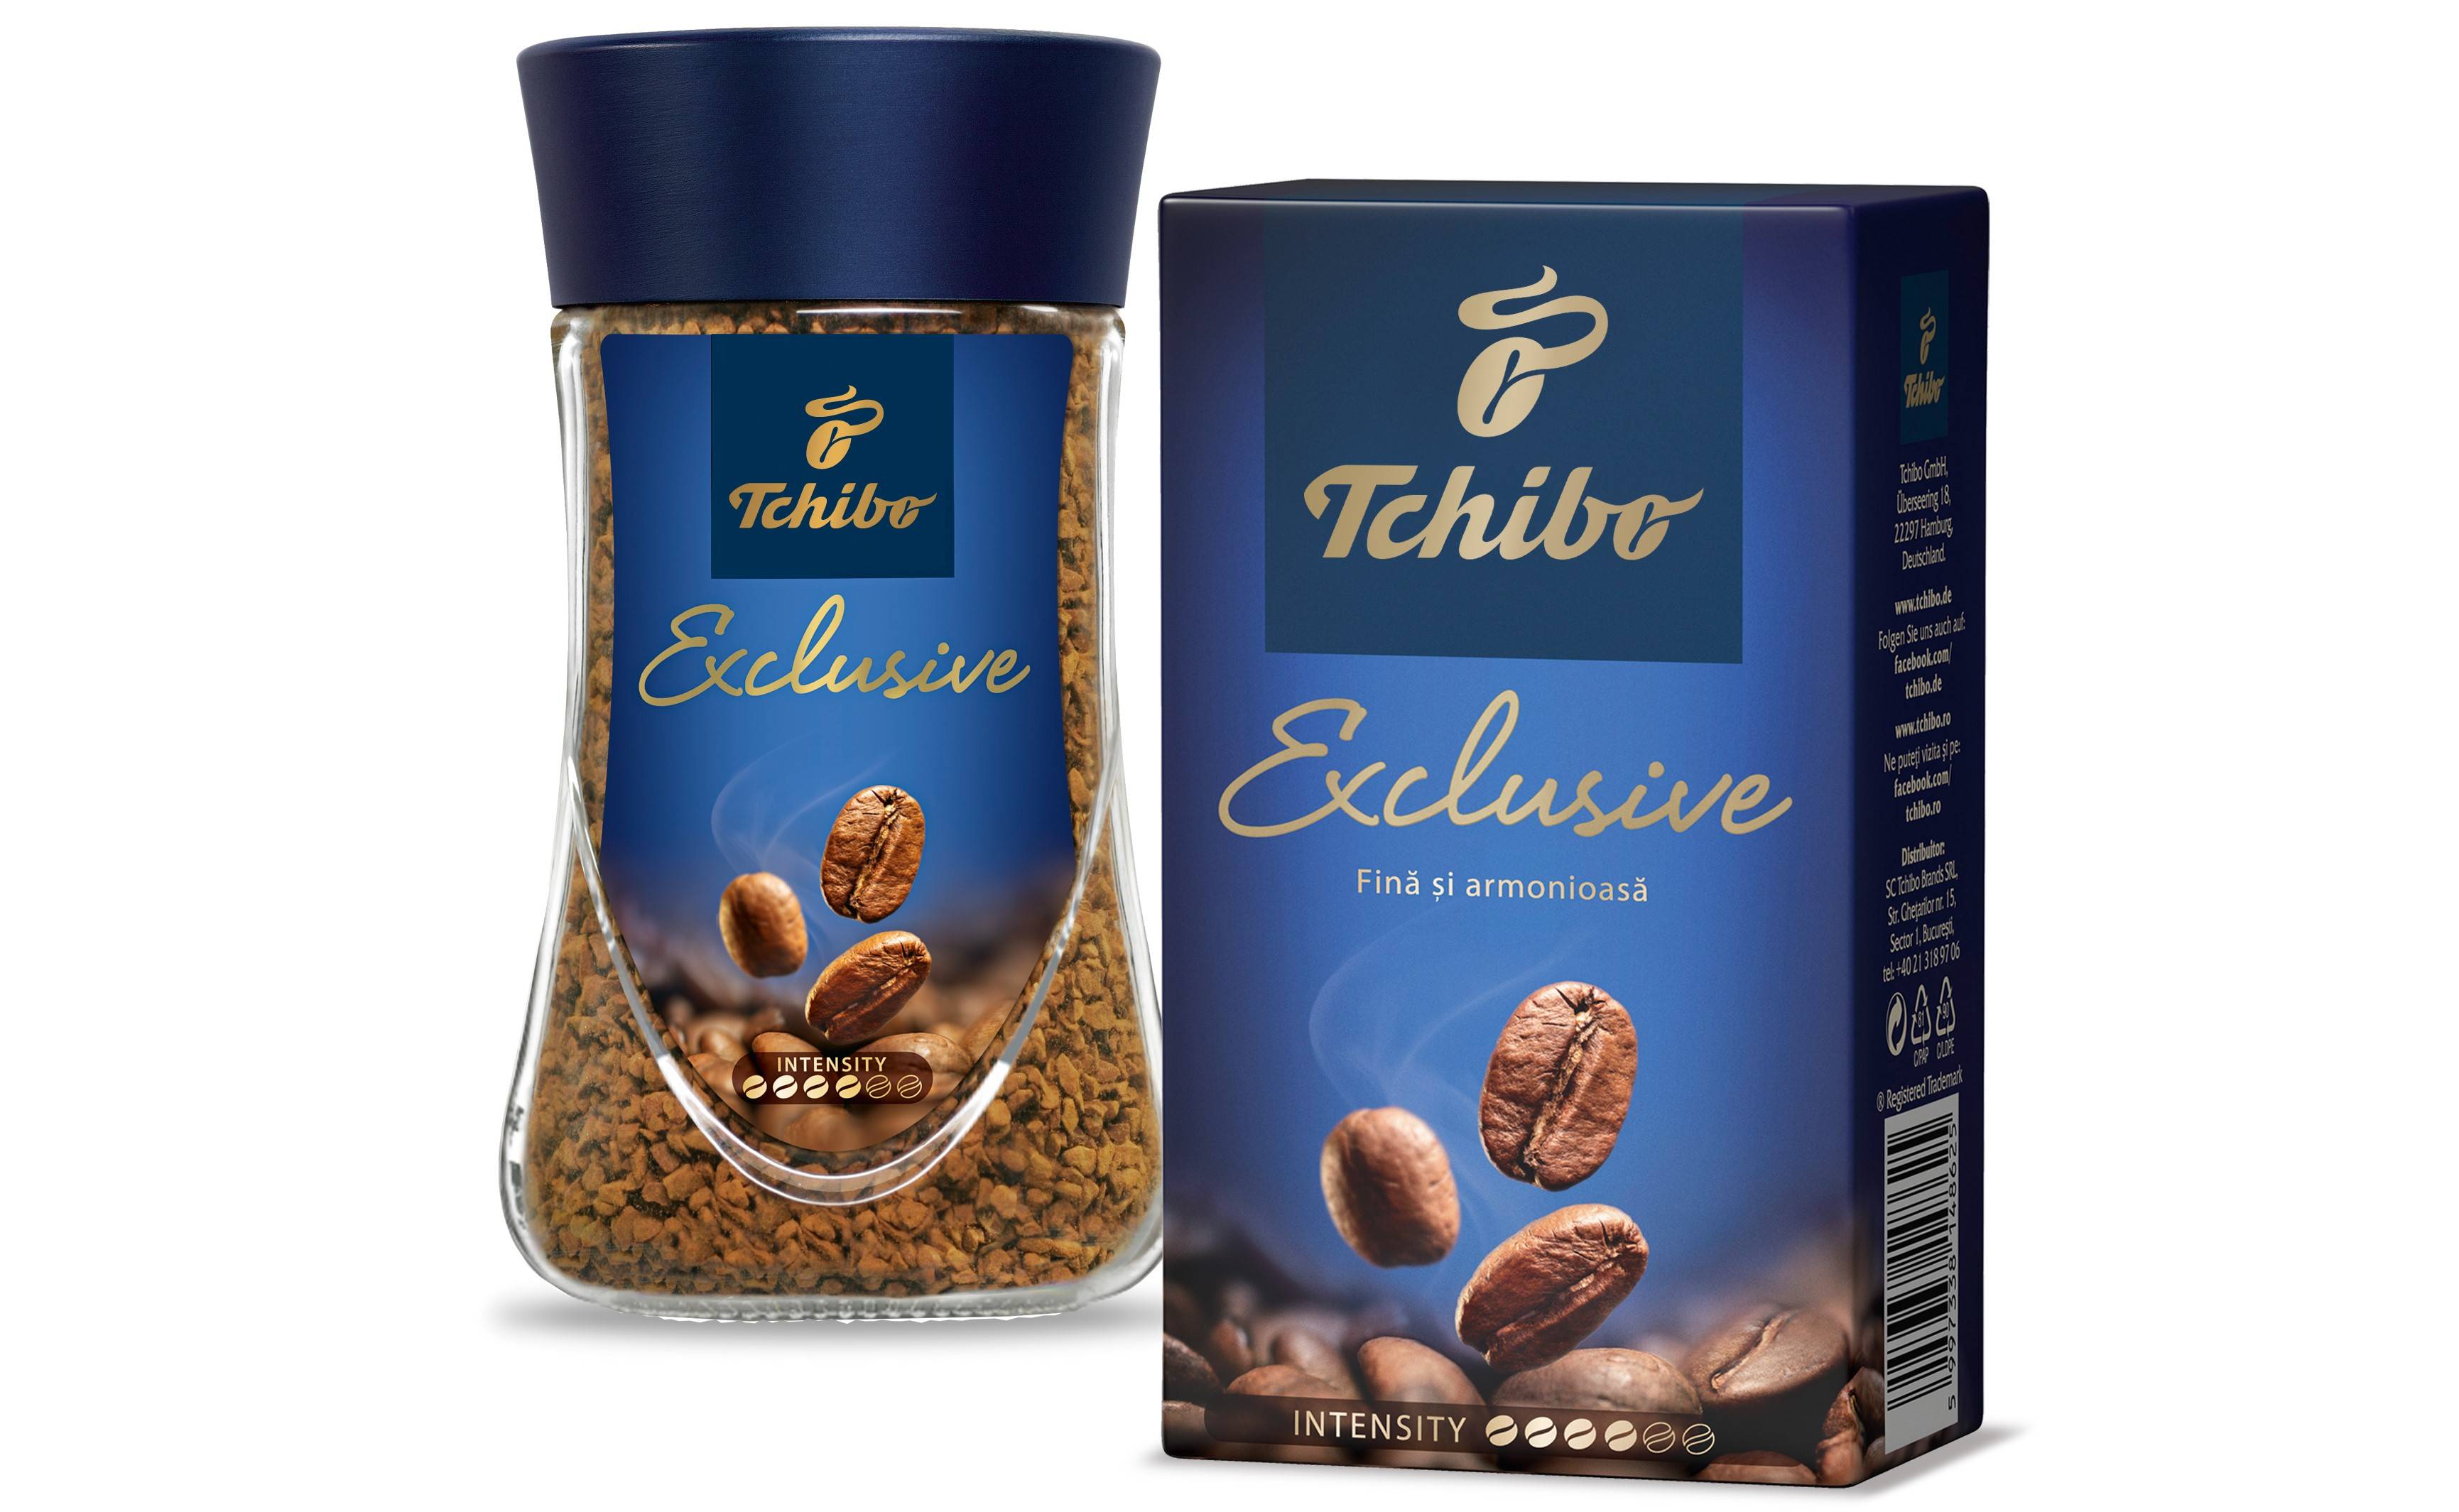 Кофе tchibo